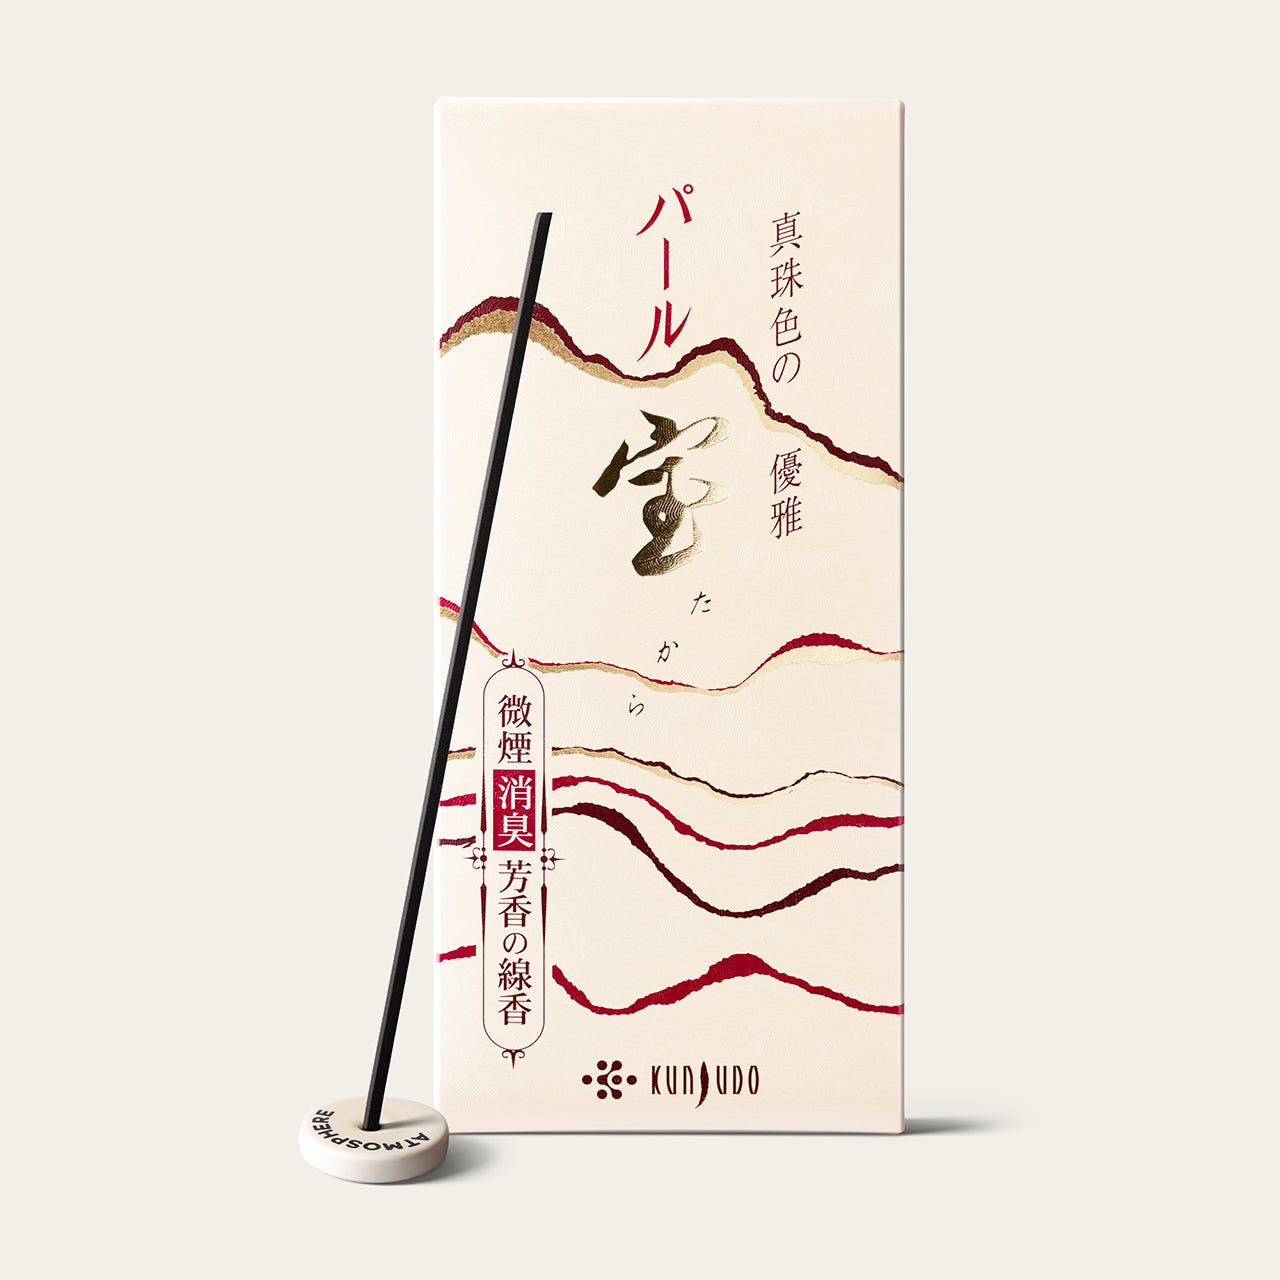 Kunjudo Pearl Takara Japanese incense sticks (150 sticks) with Atmosphere ceramic incense holder